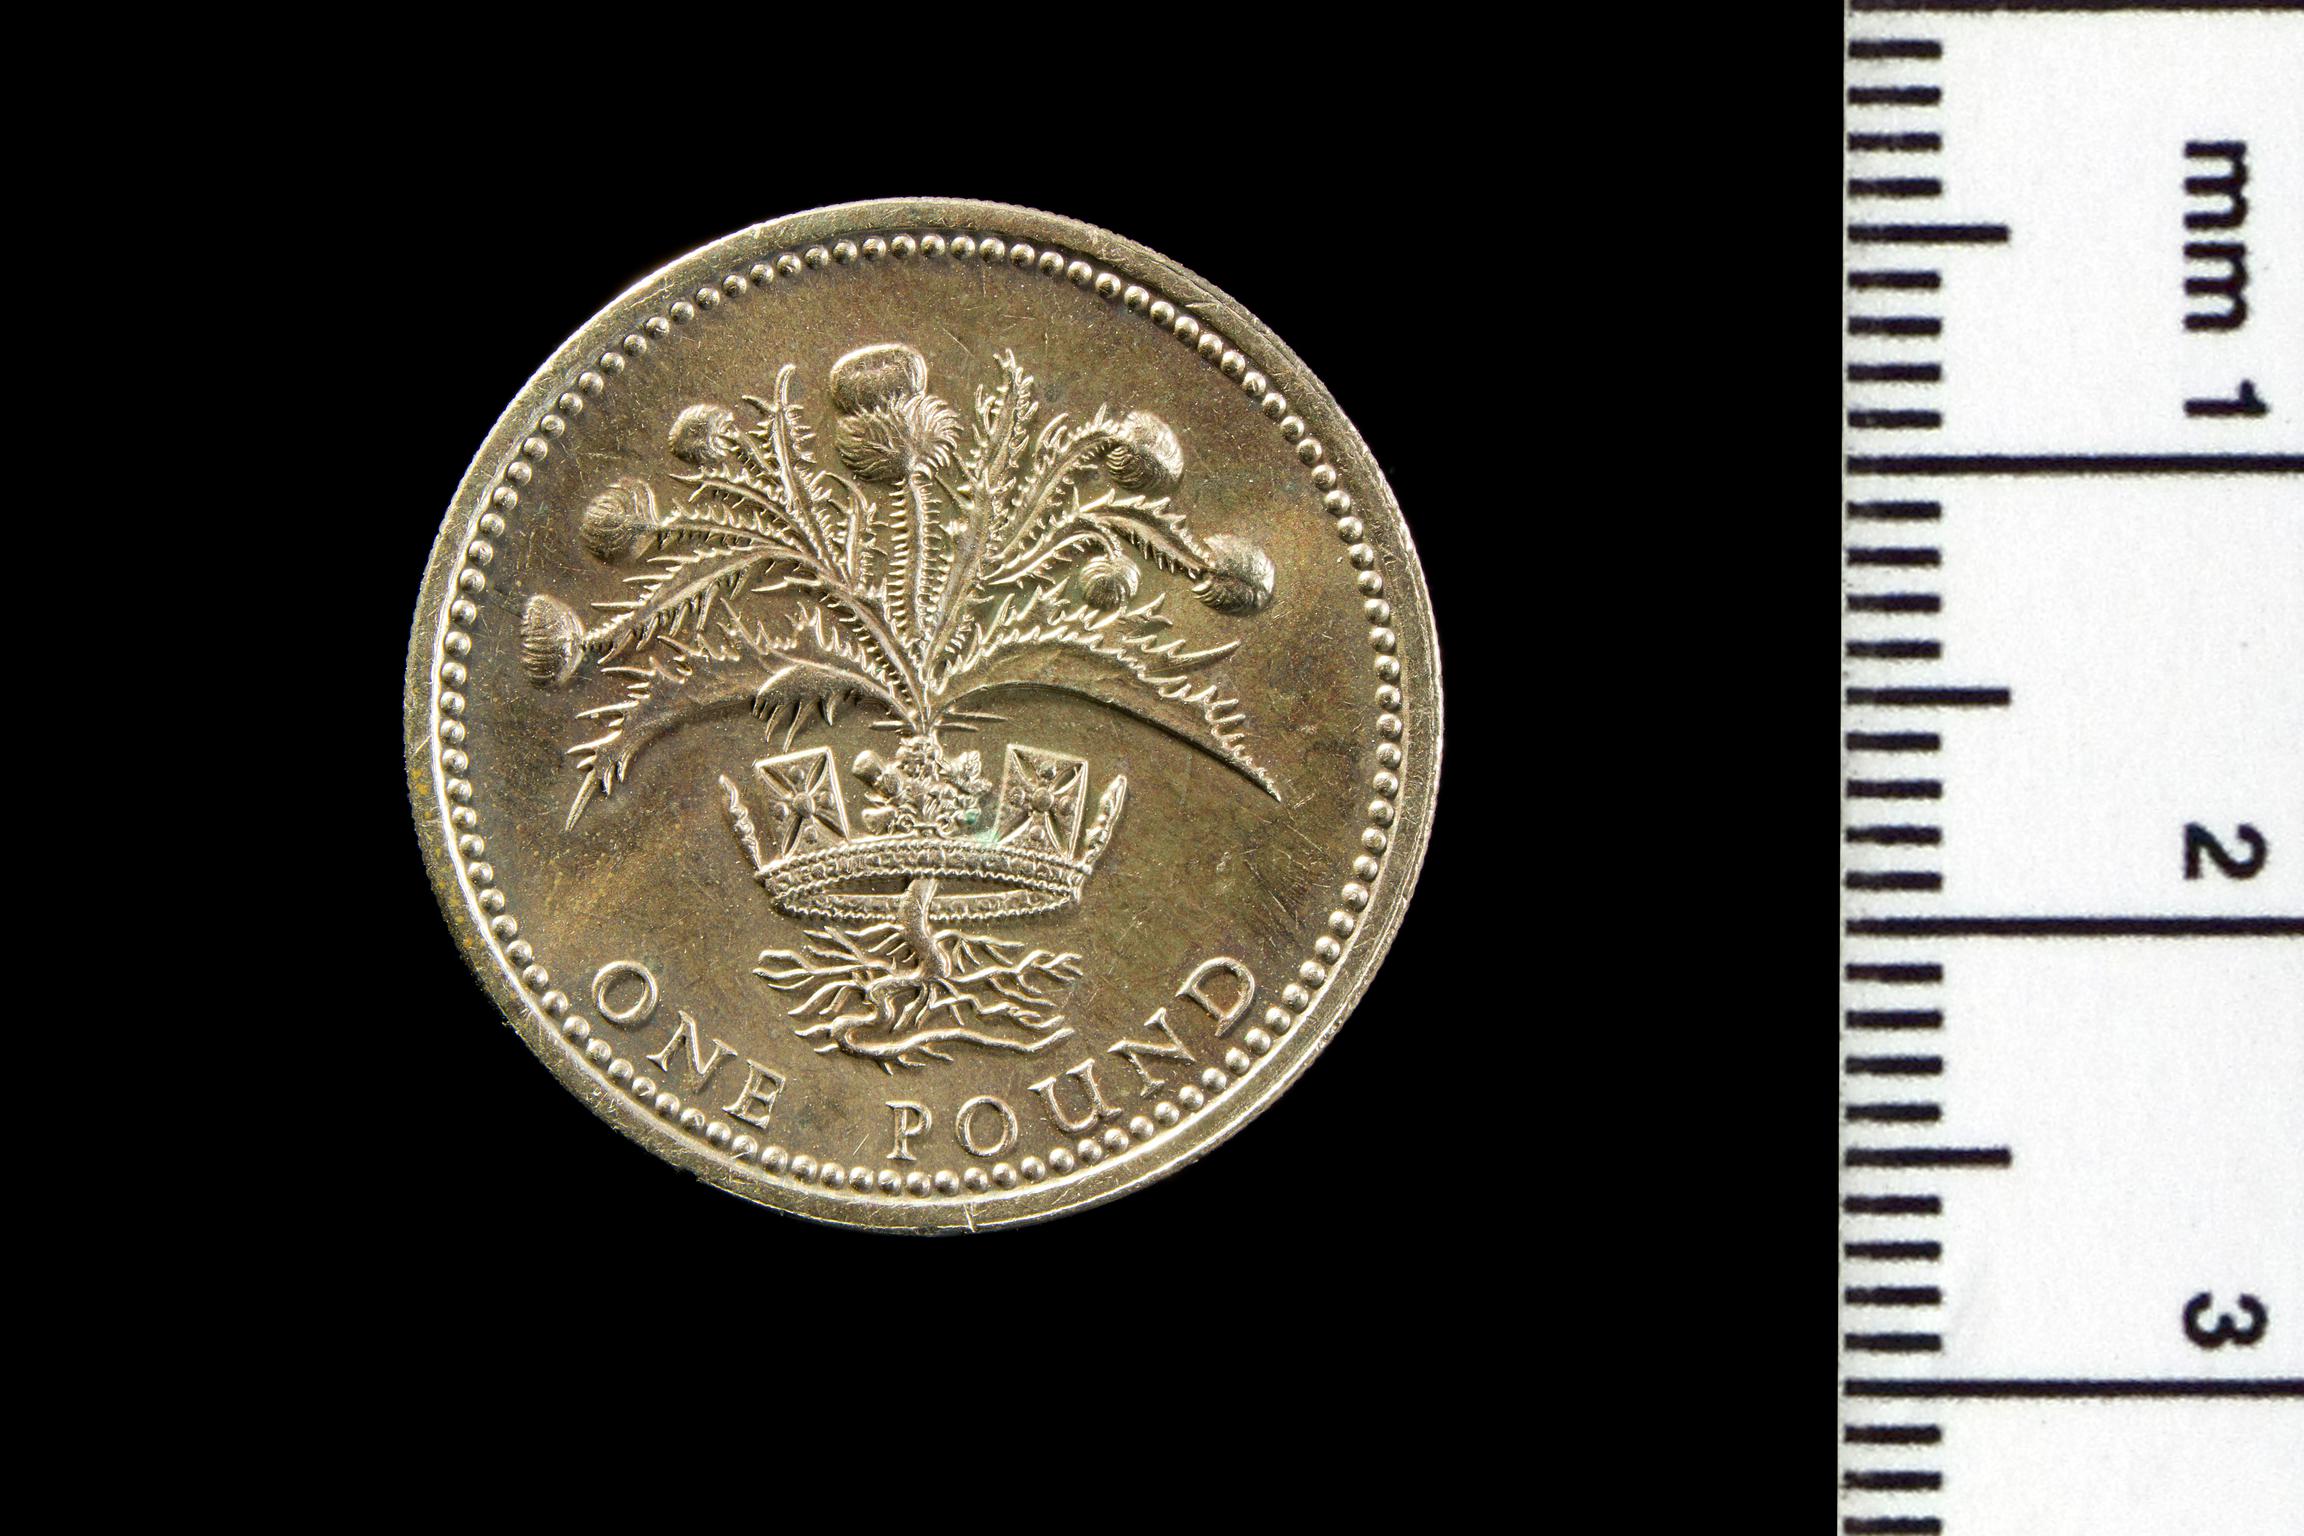 Elizabeth II pound (Scottish type)